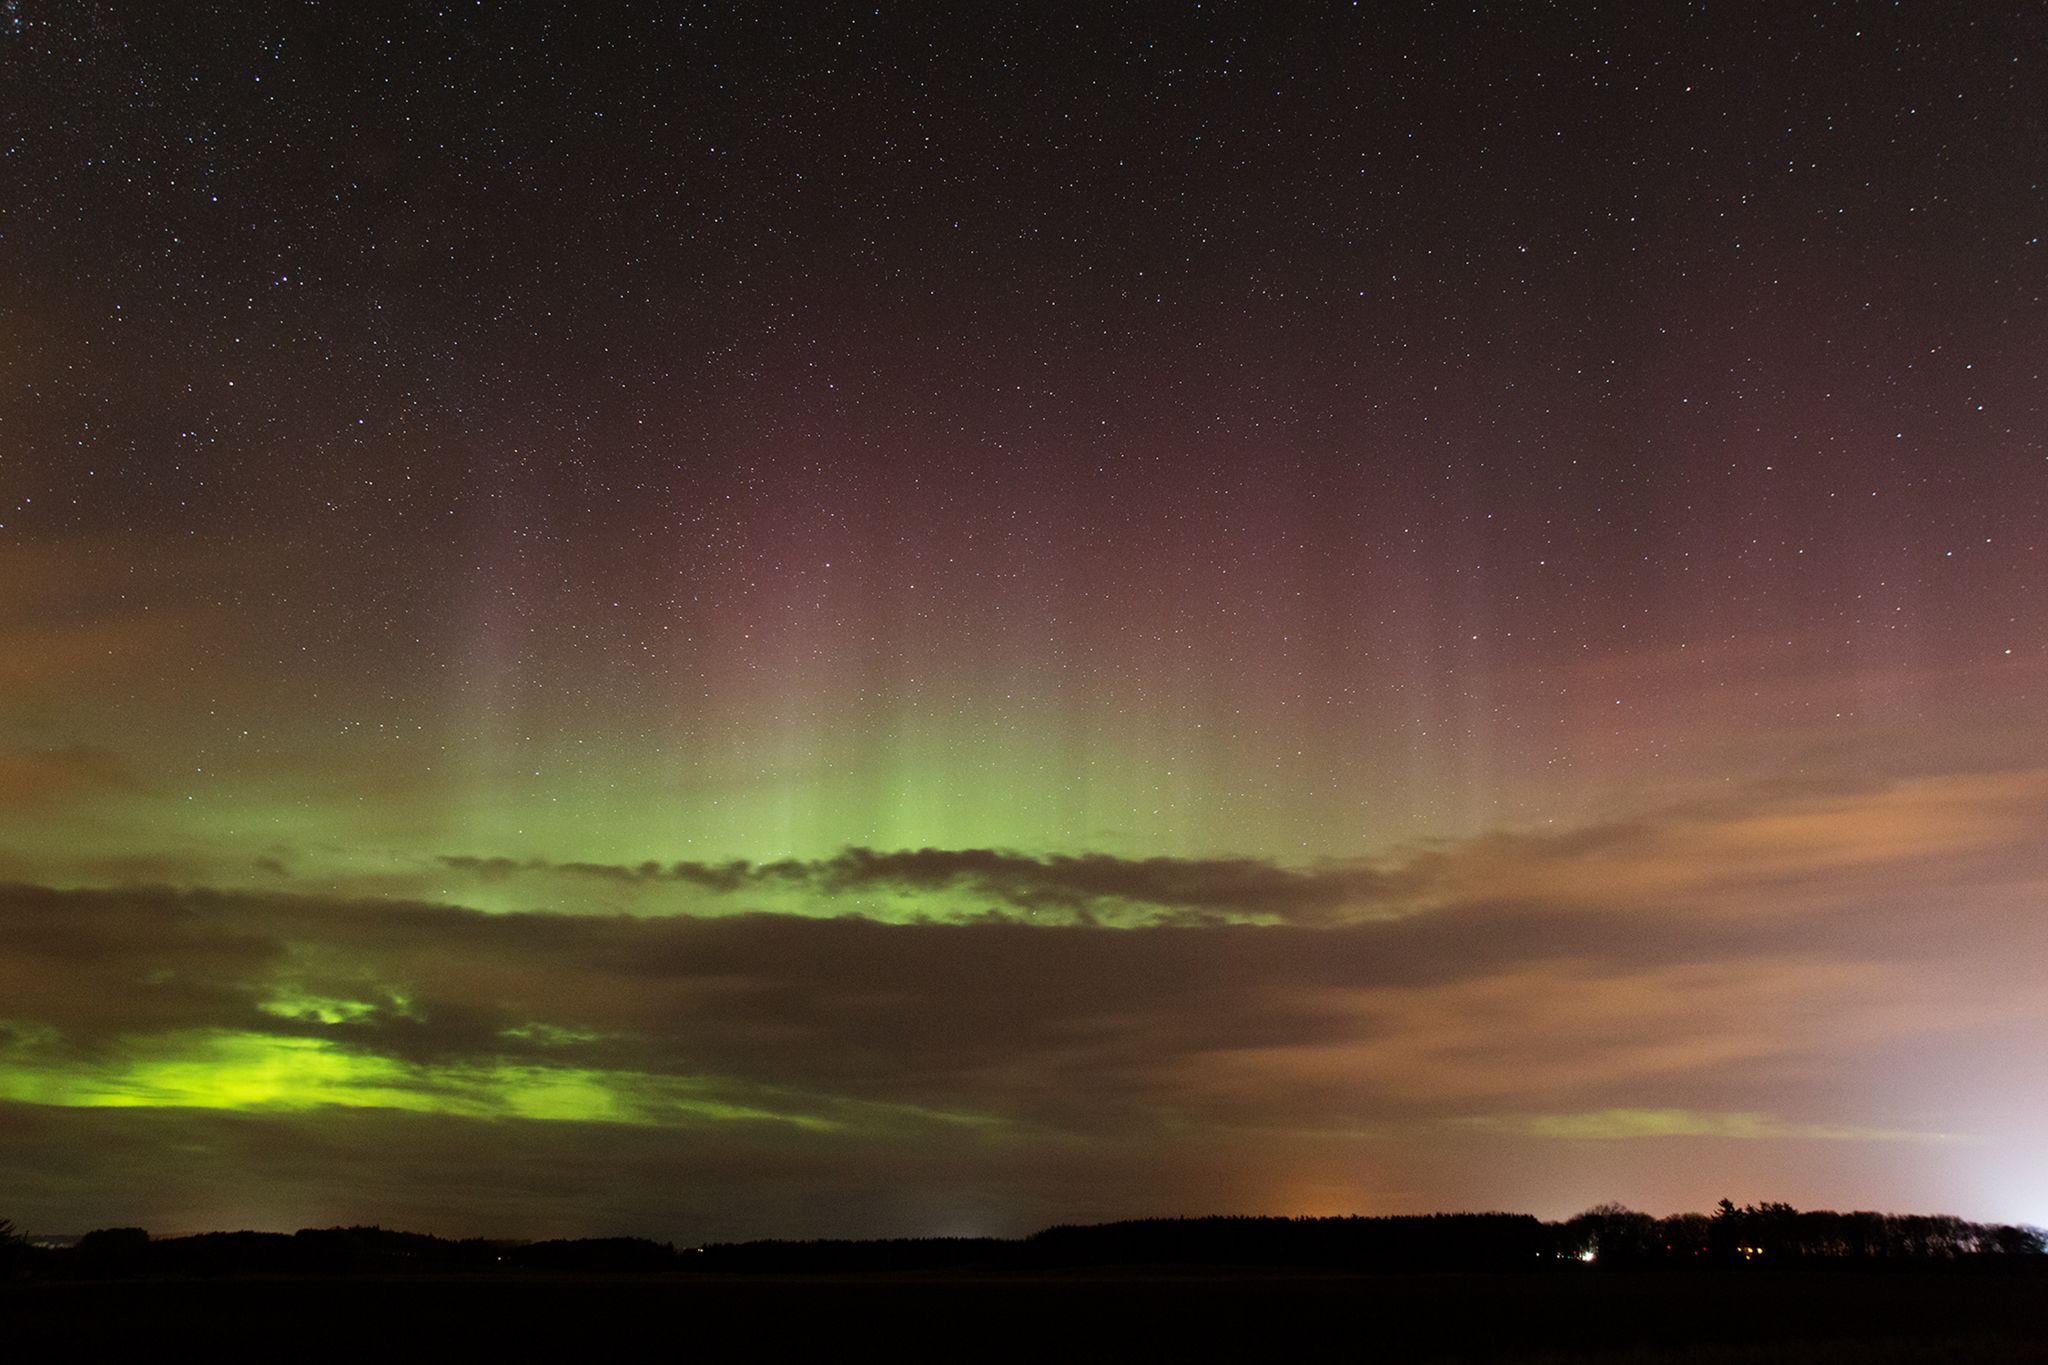 Bright lights: Images of Wednesday's Aurora Borealis - BBC News